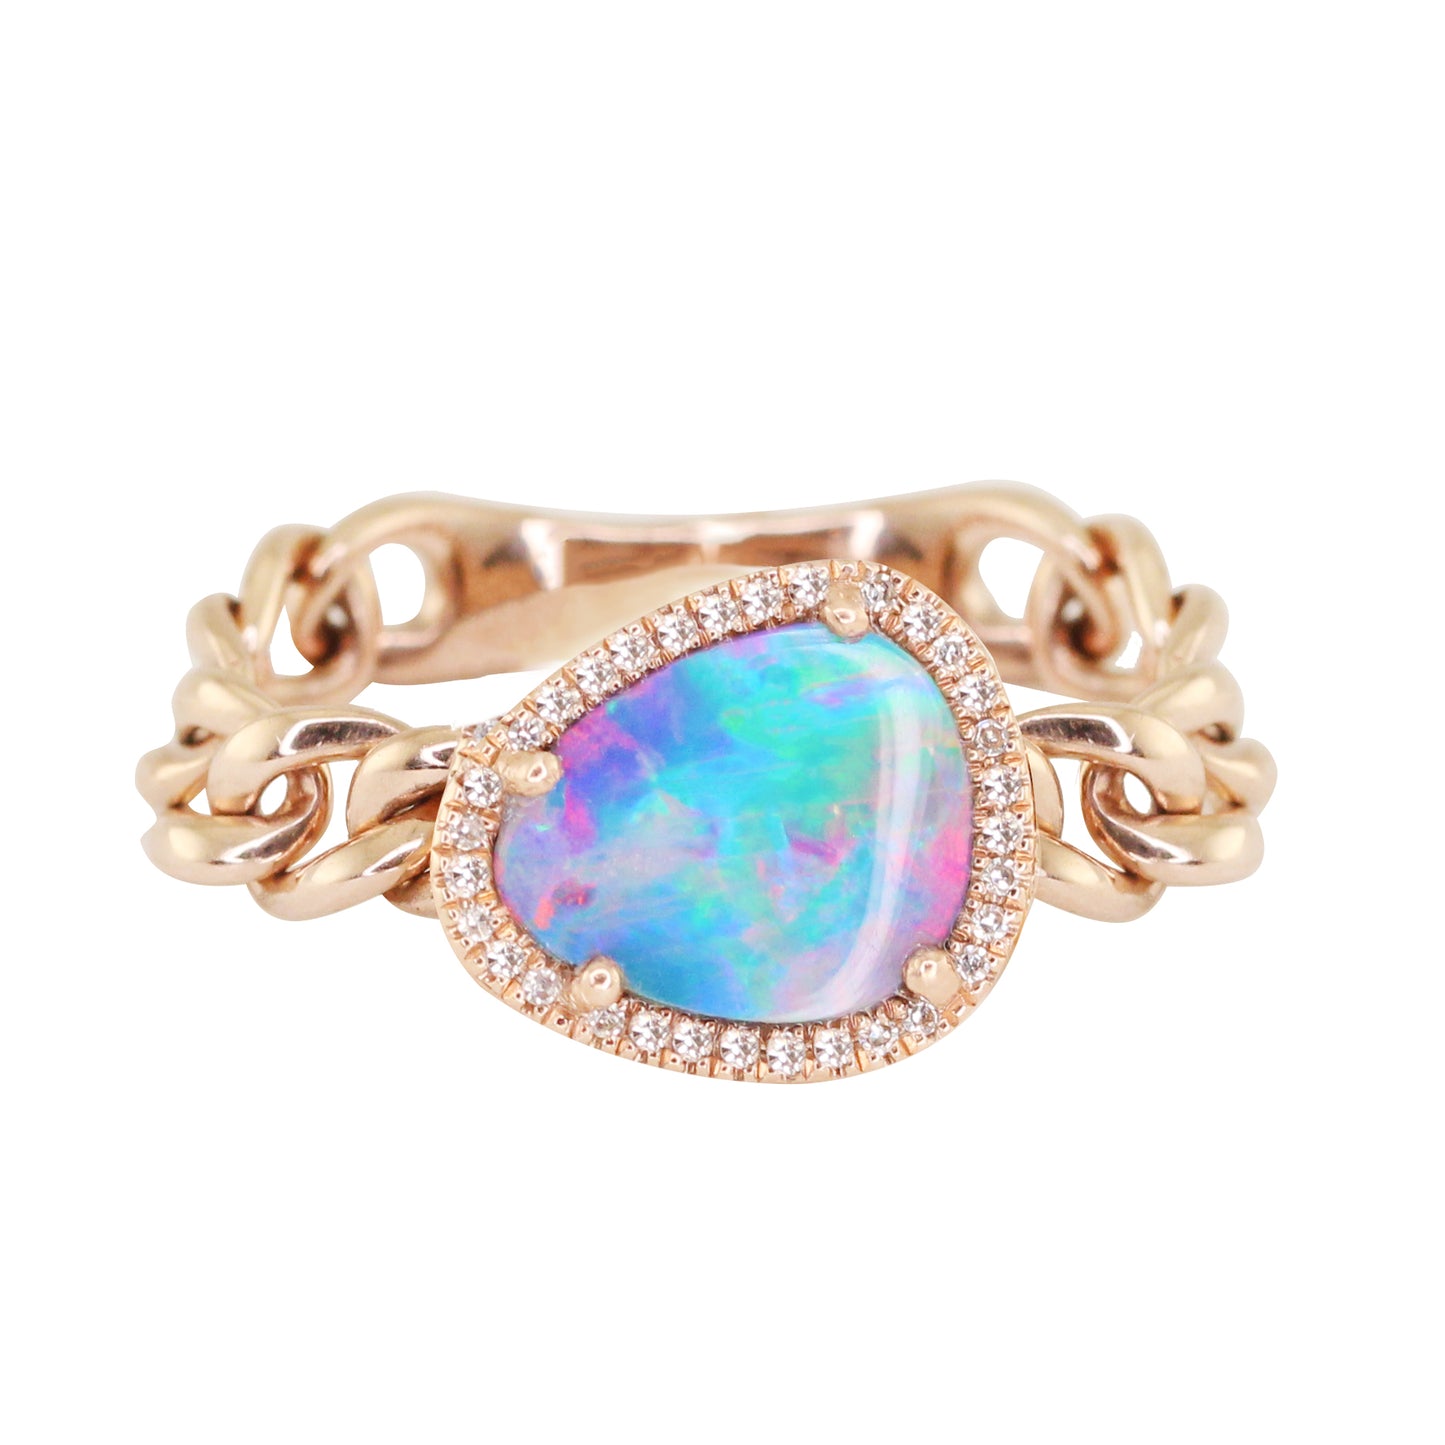 14kt gold and diamond opal chain ring - Luna Skye